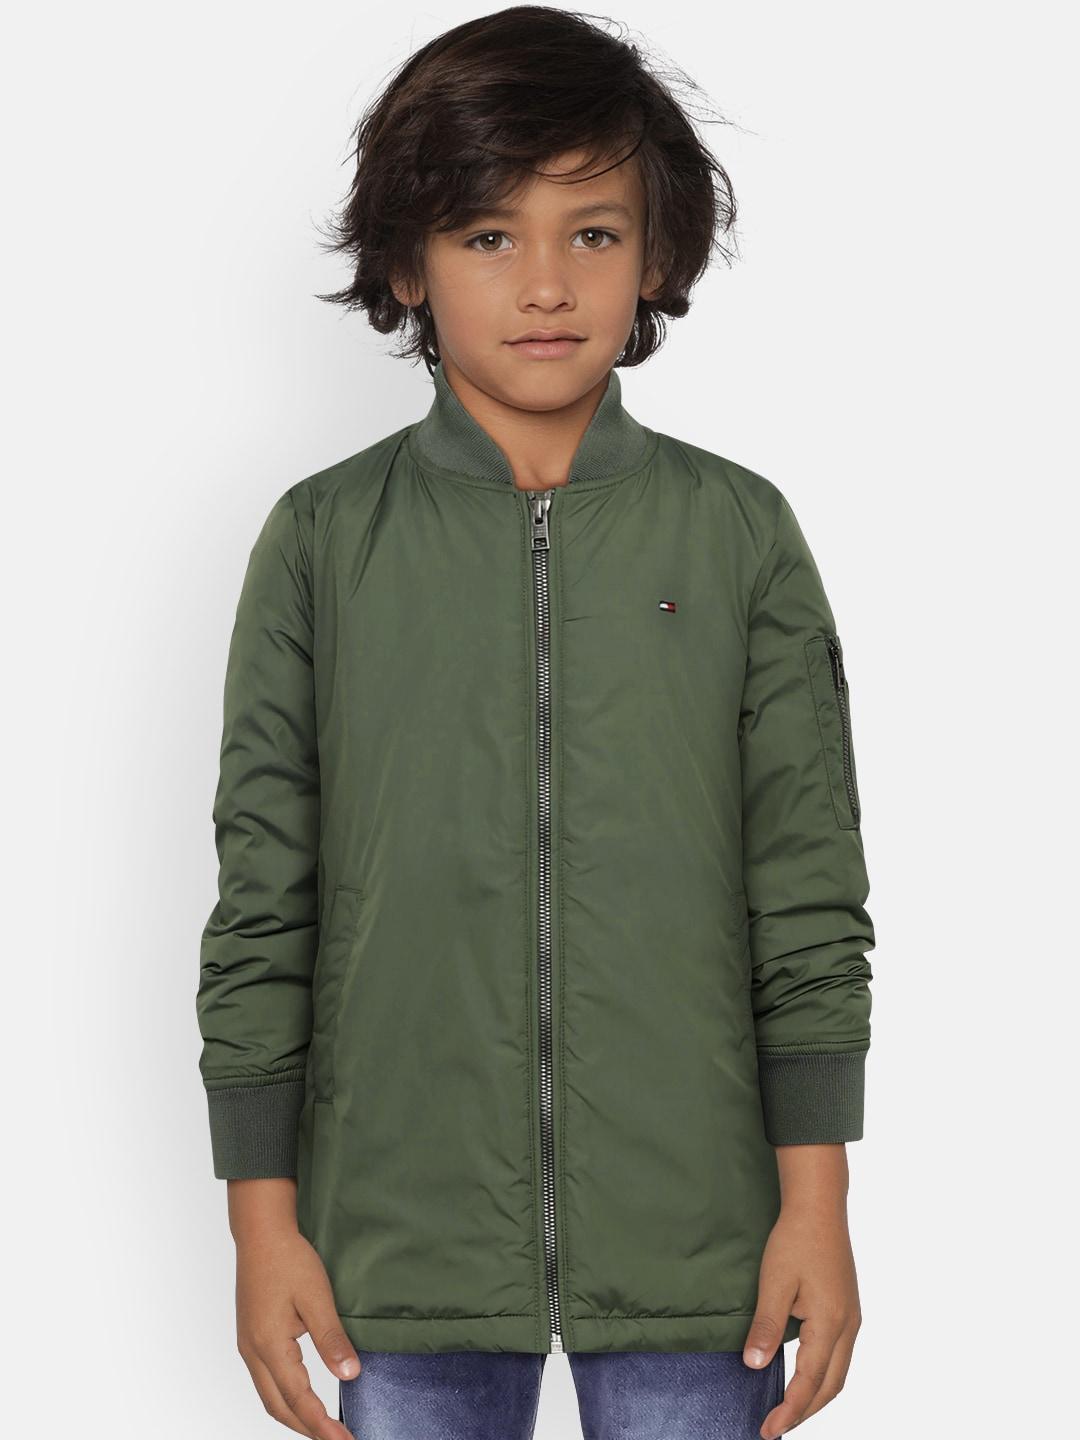 tommy hilfiger boys olive green solid ak flight jacket